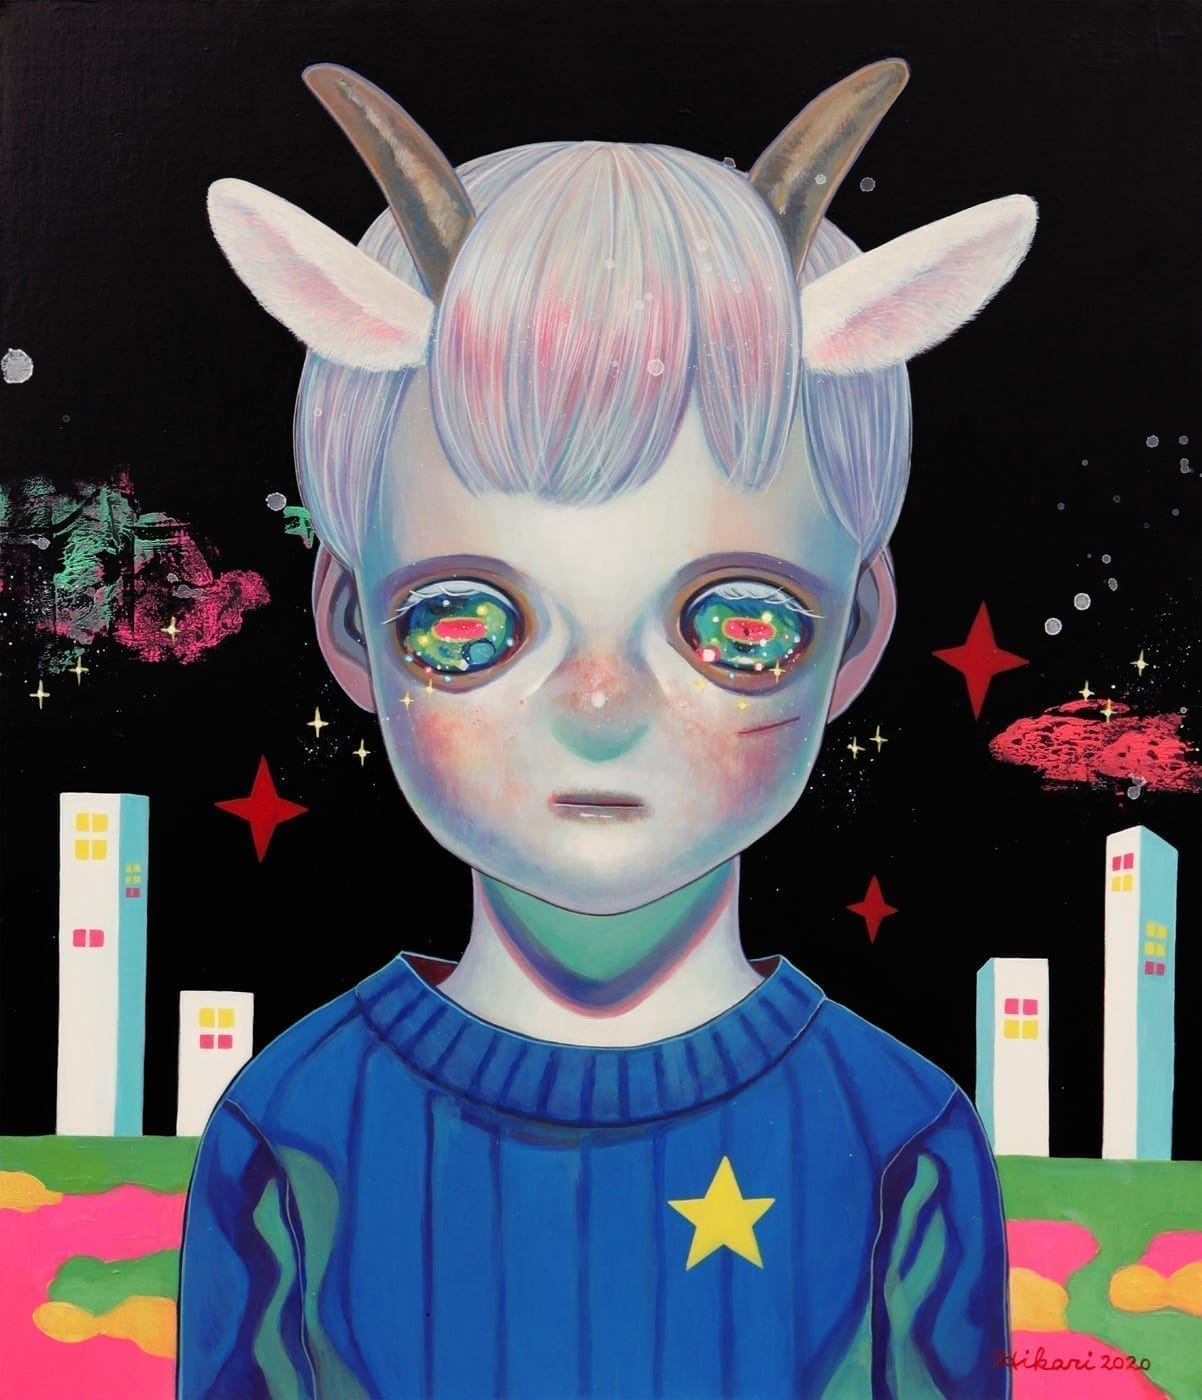 Hikari Shimoda Hidden in the Night Goat Oil on canvas 20.9 x 17.9